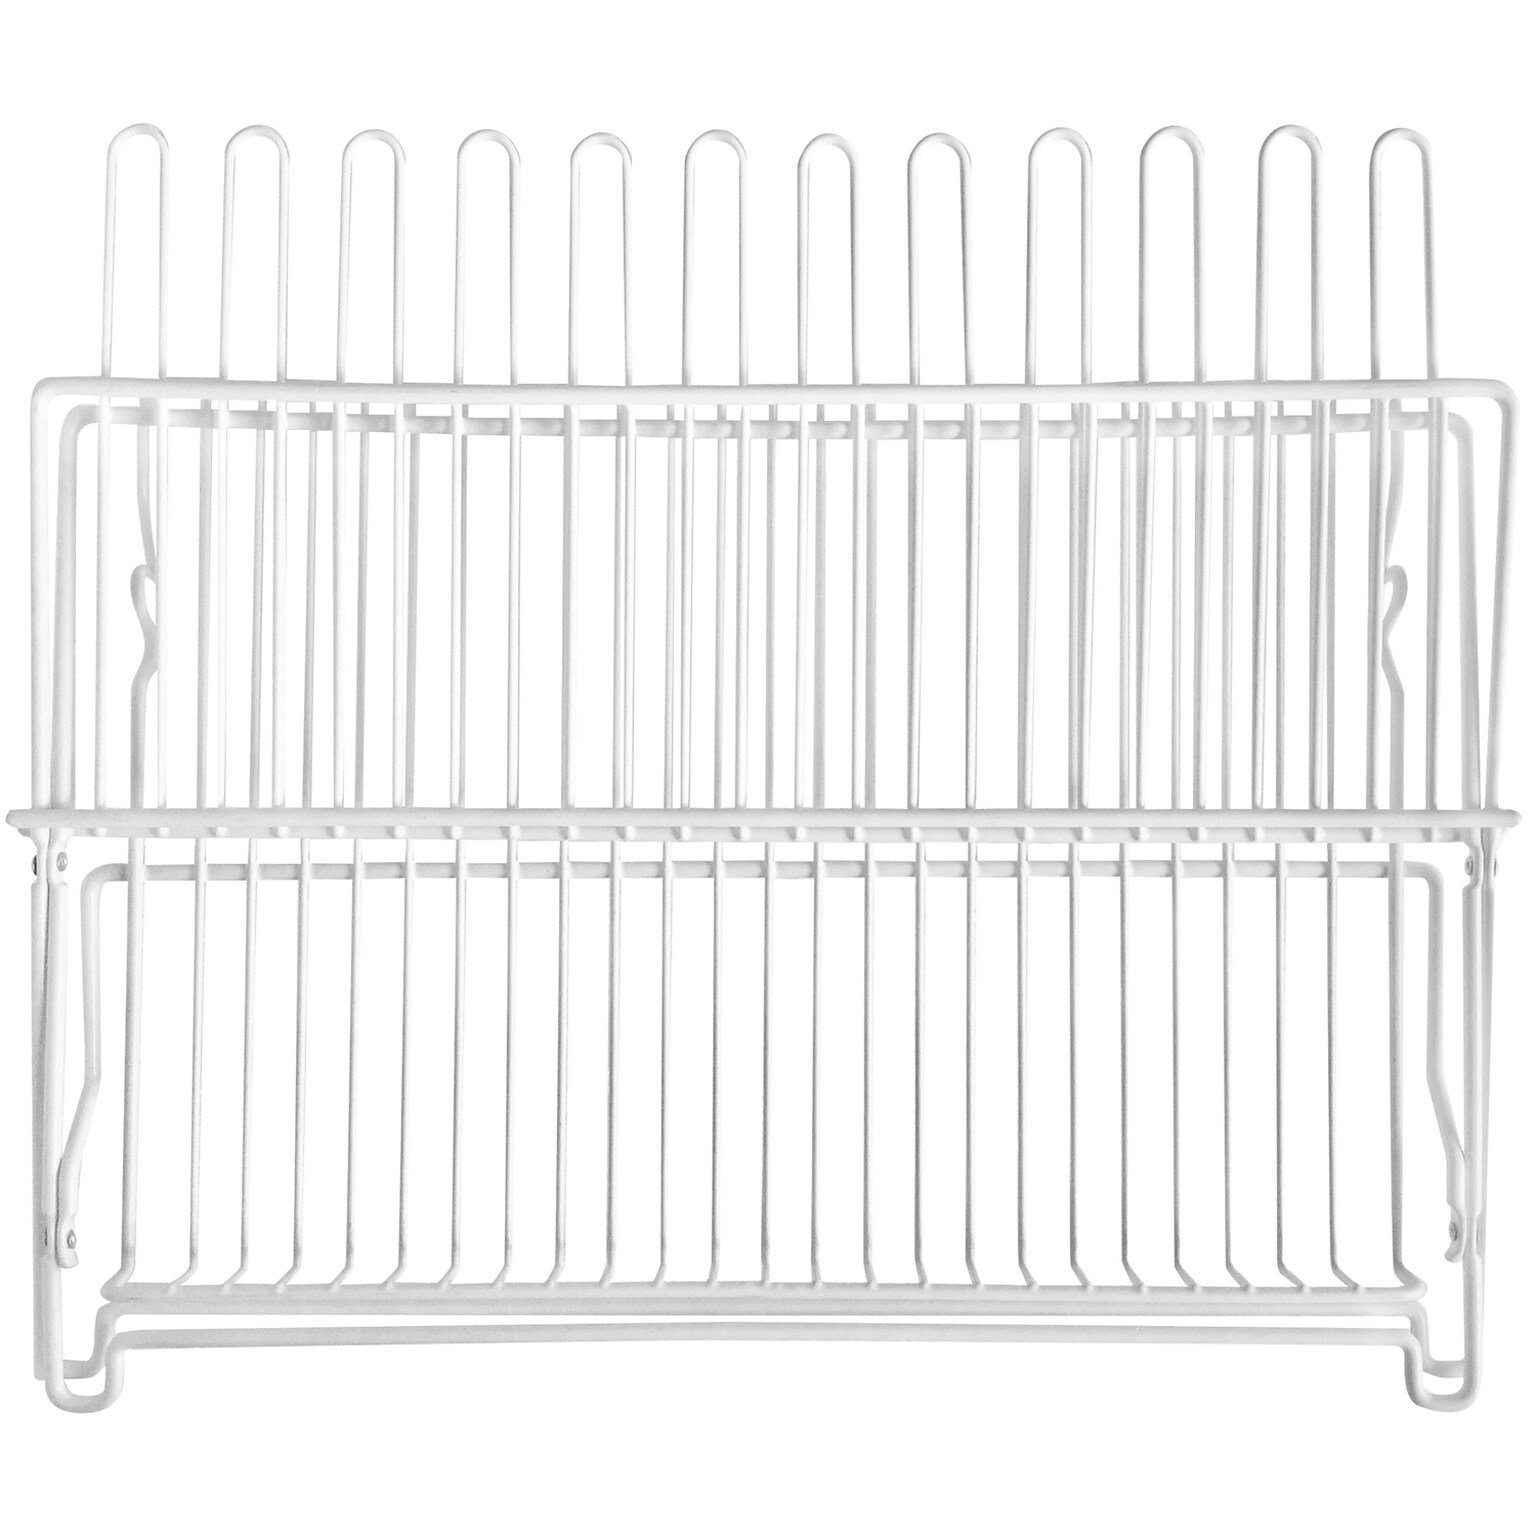 Better Houseware  Coated-Steel Folding Dish Rack , White (1489/W)